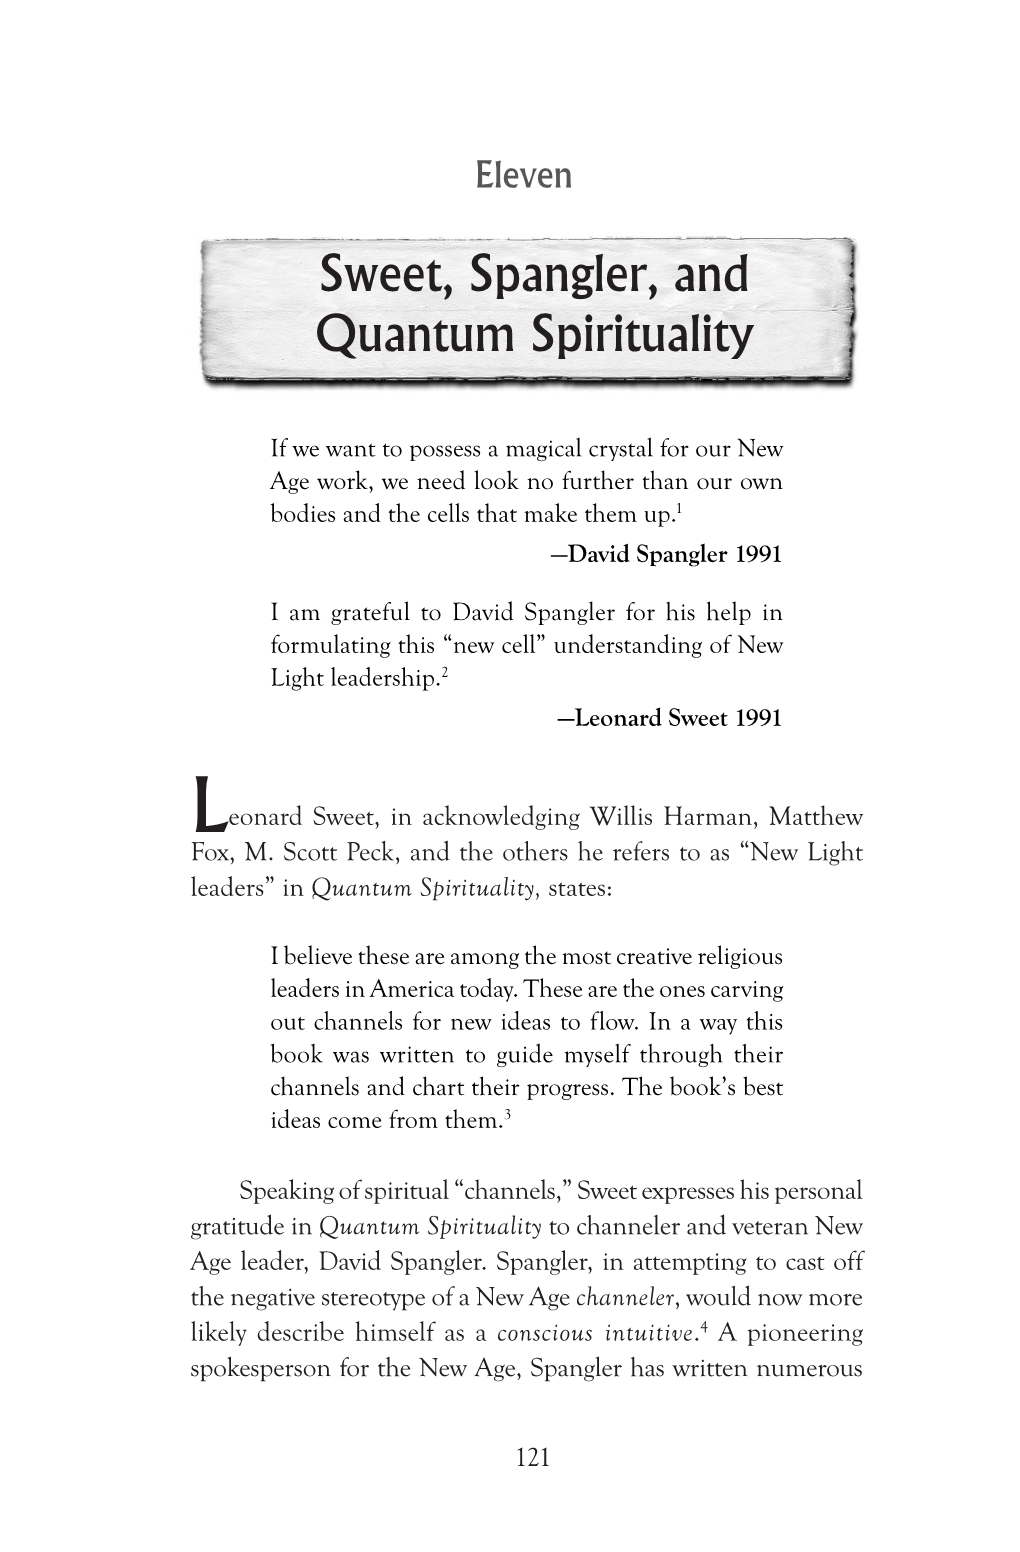 Sweet, Spangler, and Quantum Spirituality